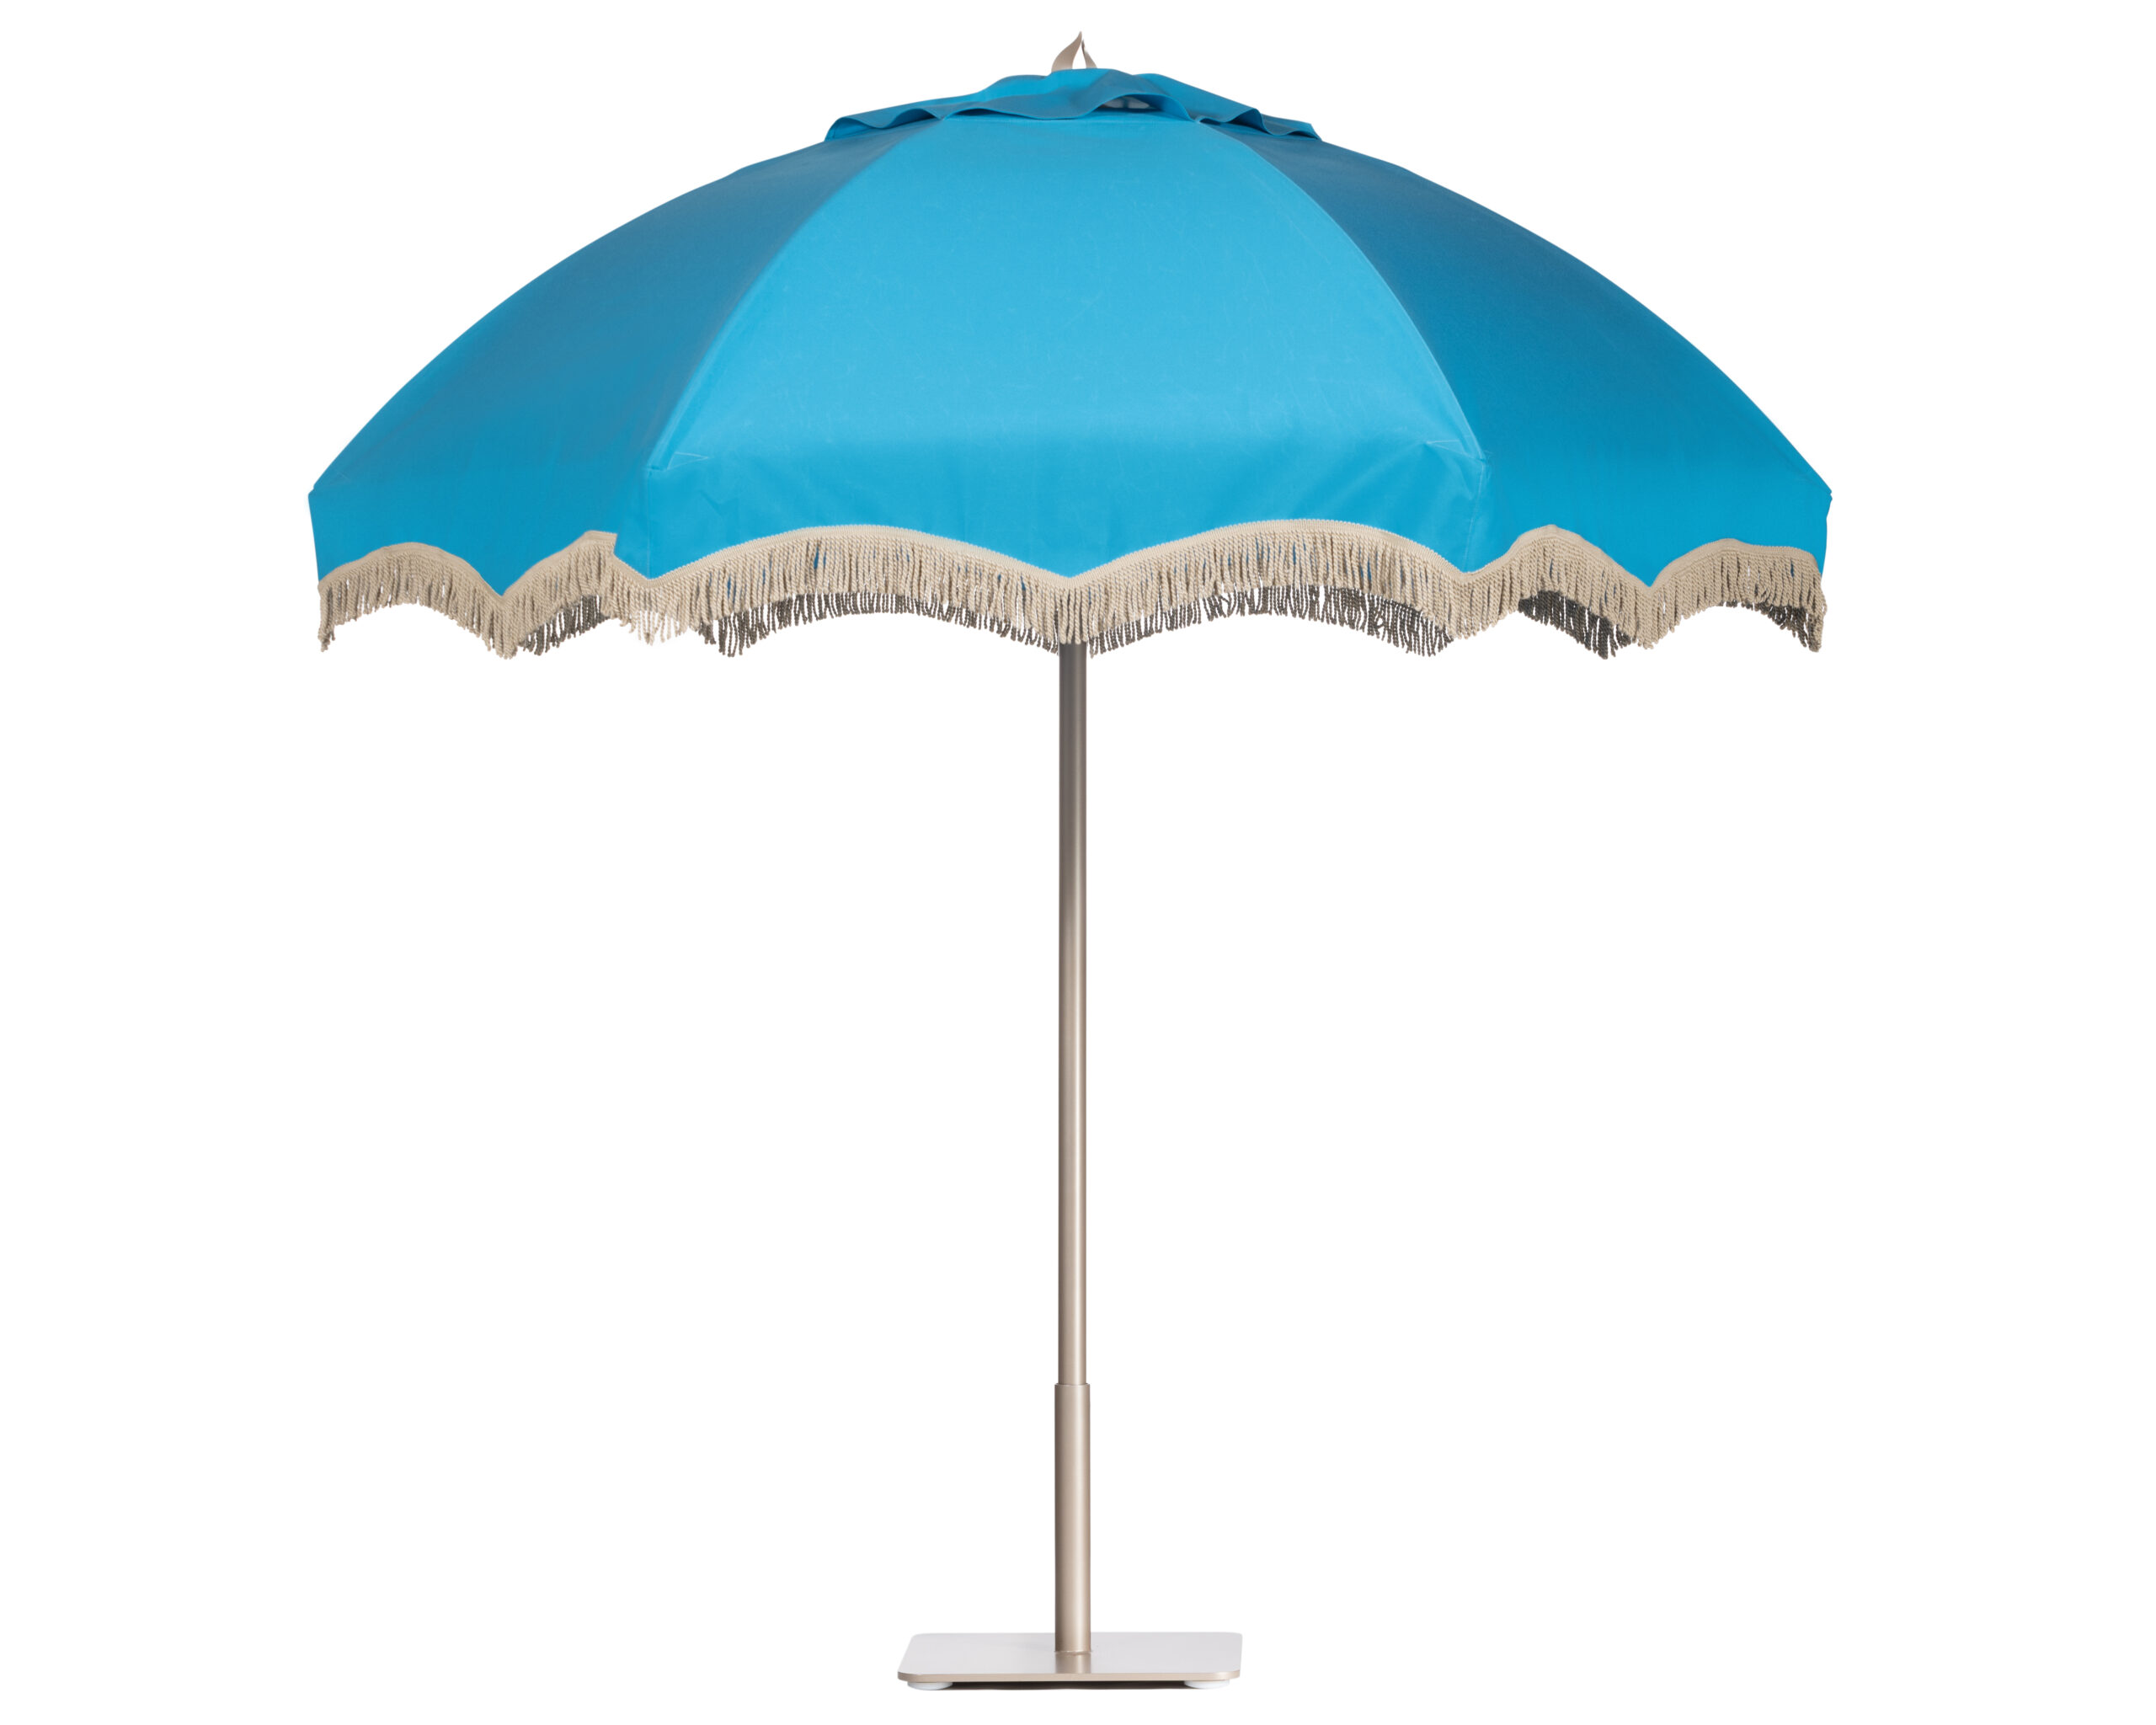 Image of studio shot of a Santa Barbara umbrella